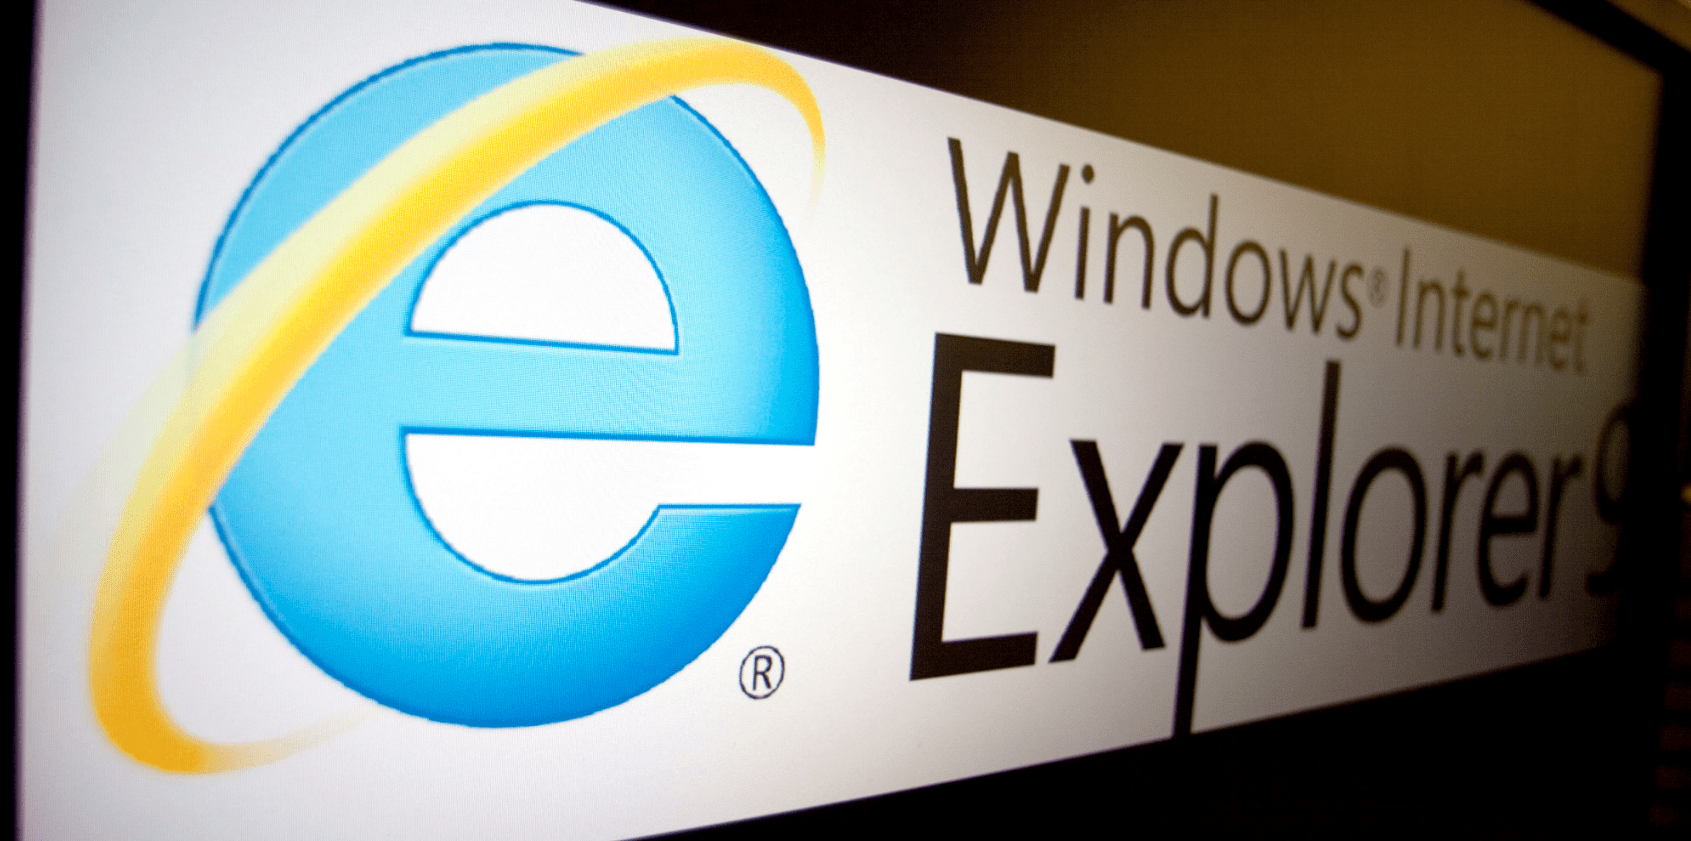 Internet Explorer officially dies this November